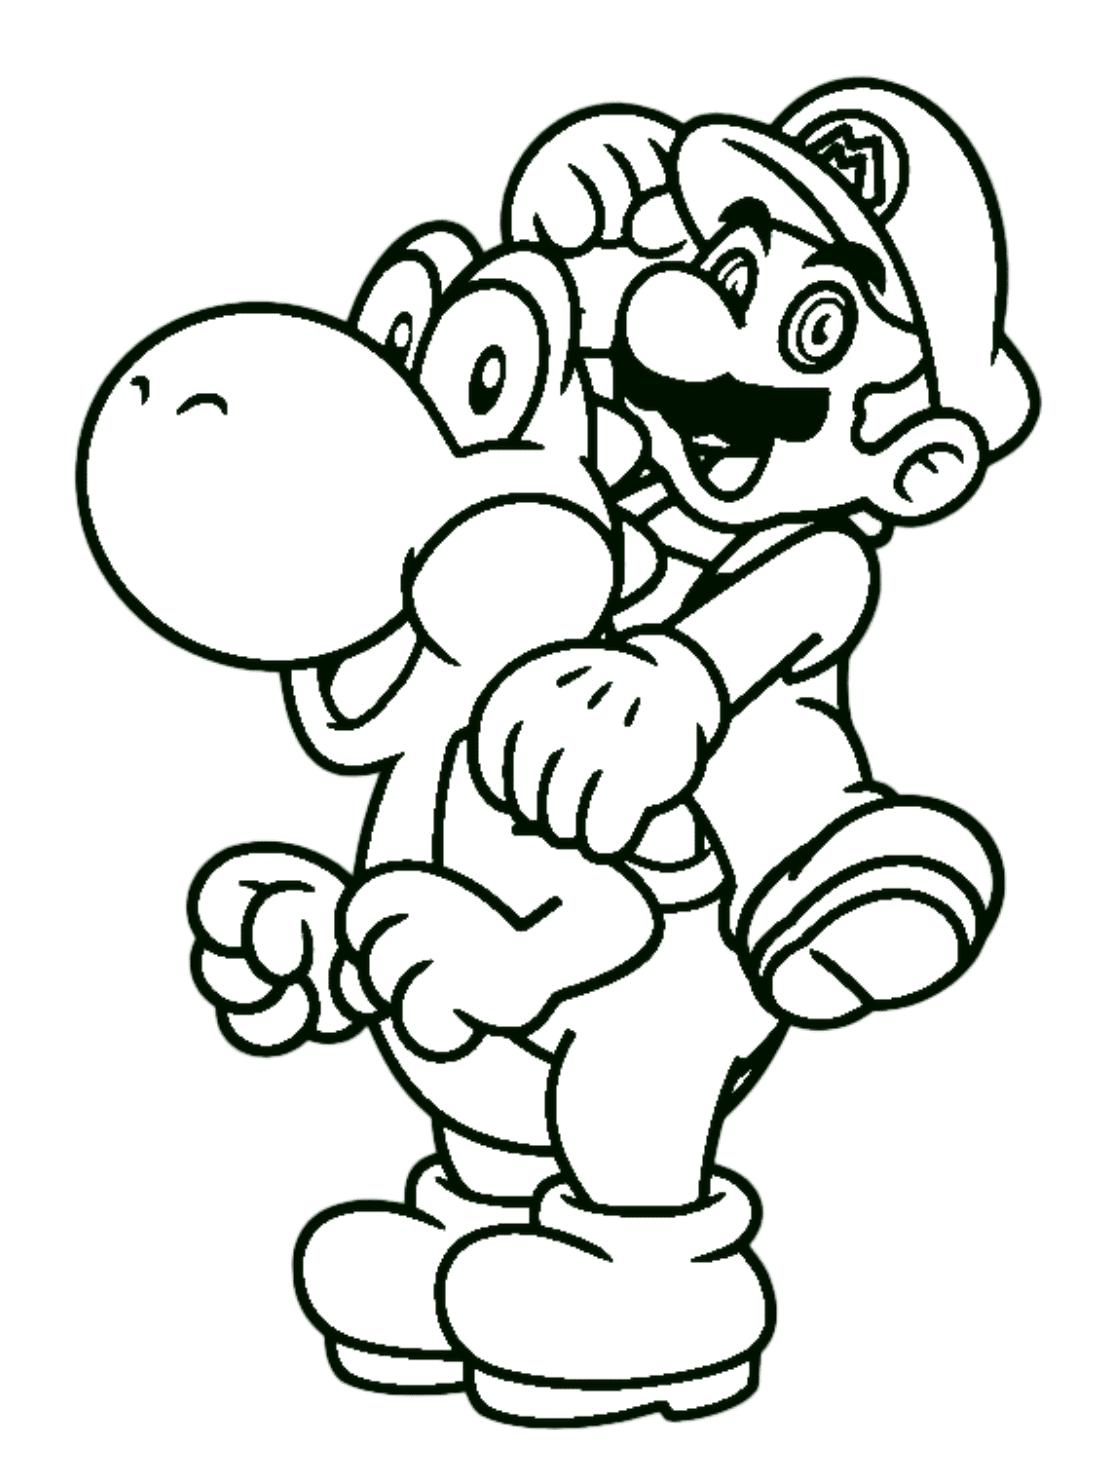 Mario Riding Luigi - Coloring Online Free